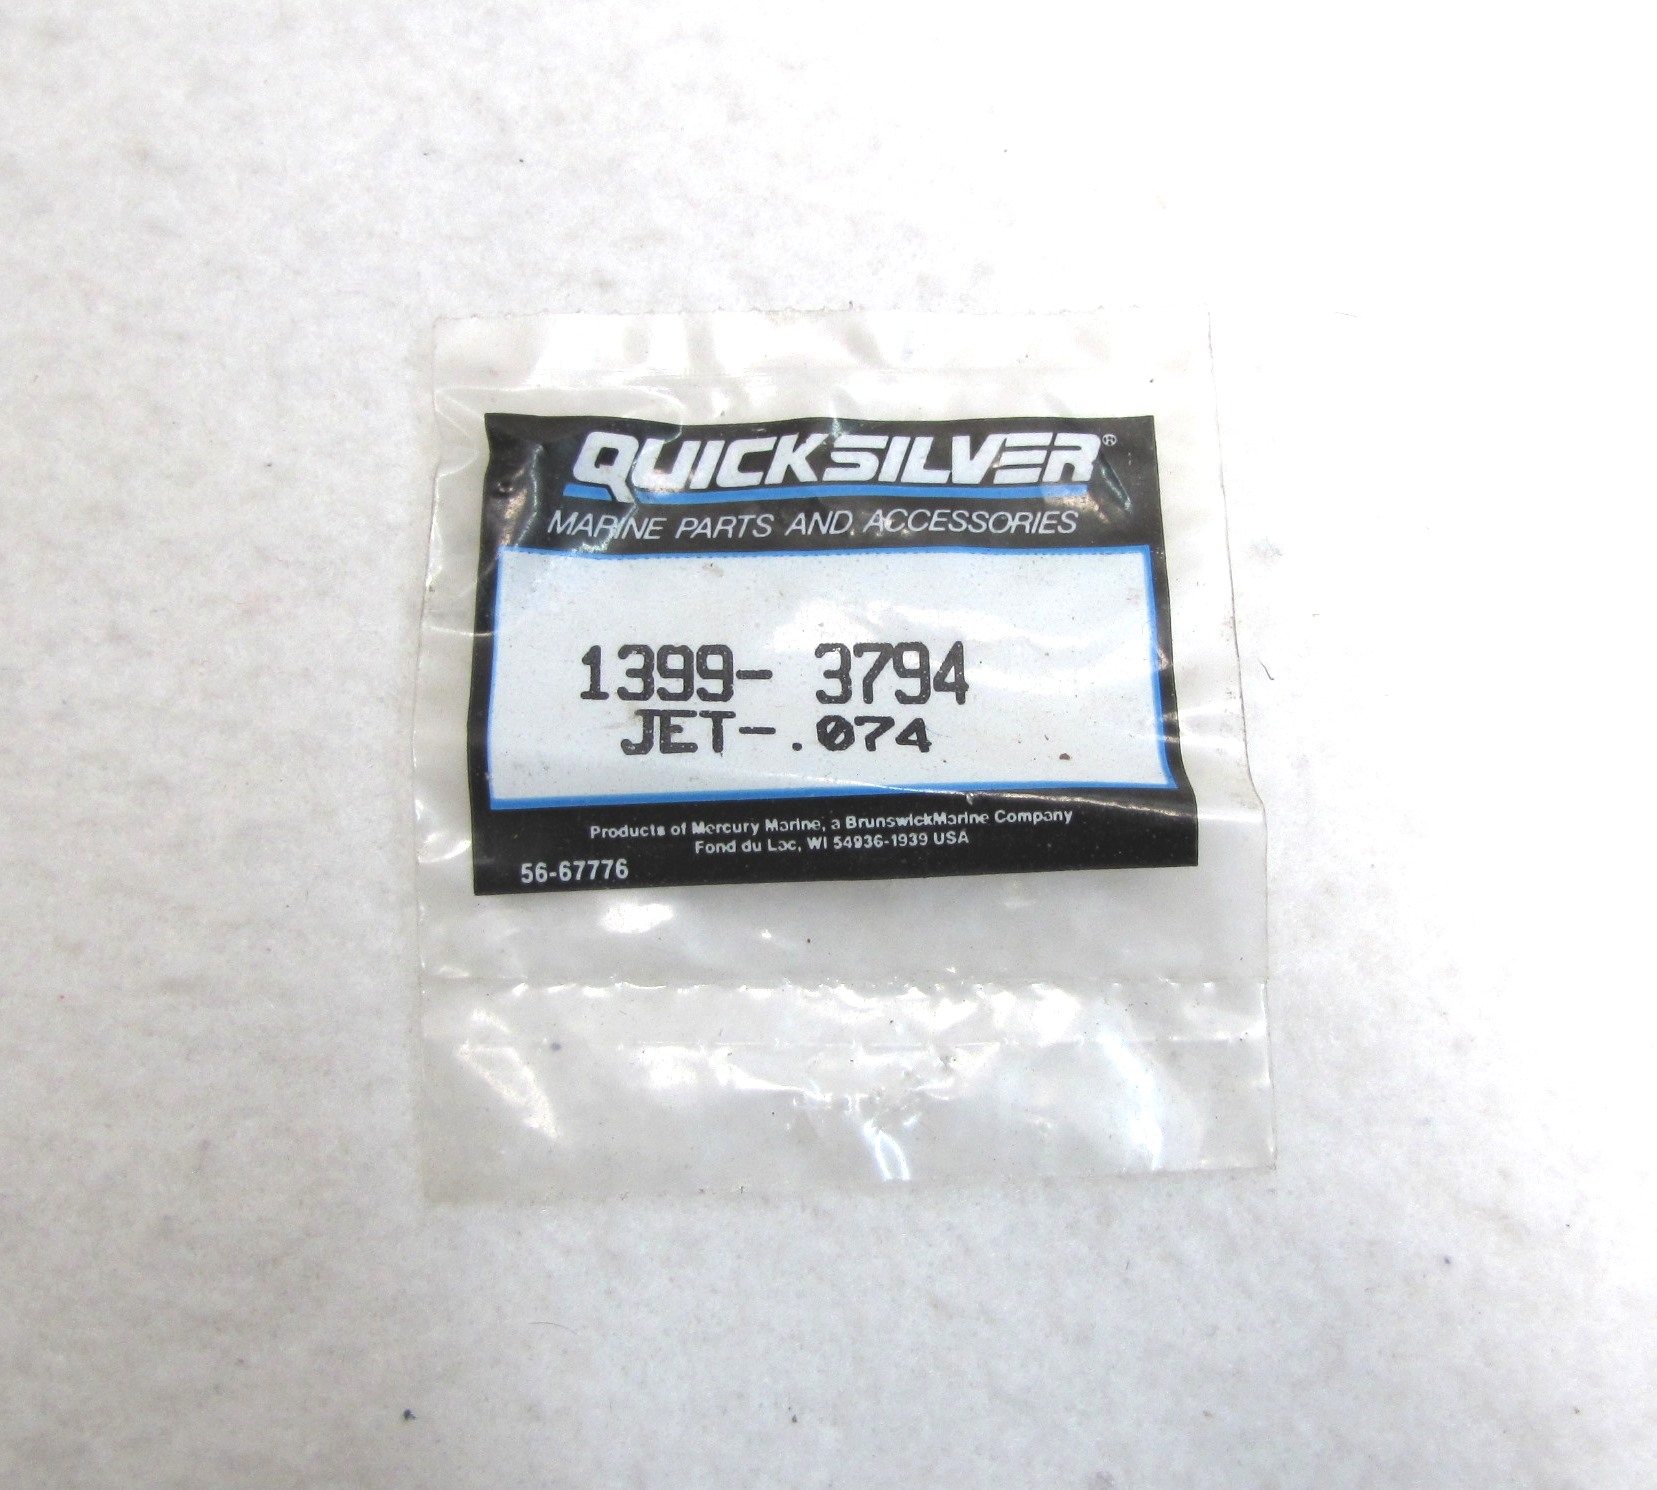 New Mercury Mercruiser Quicksilver Oem Part # 1399-3794 Jet-.074